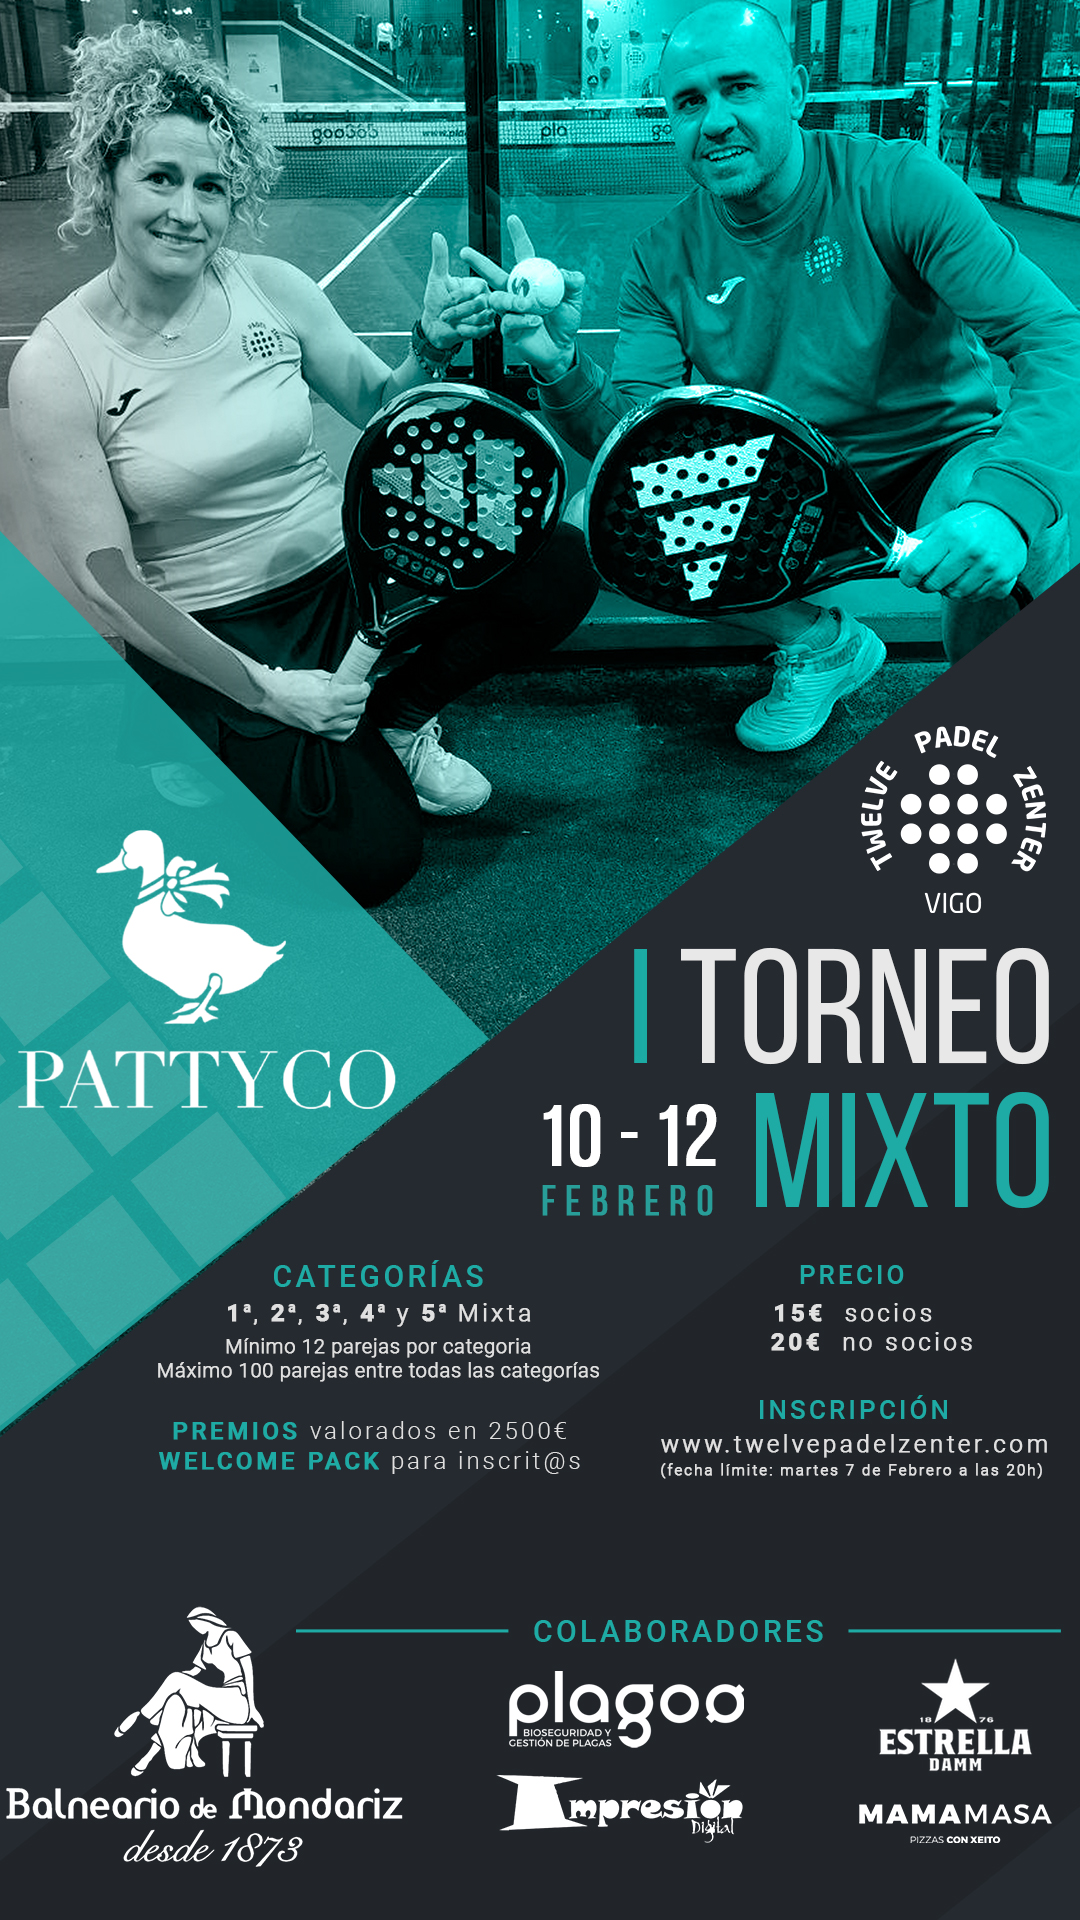 Cartel del I TORNEO MIXTO 10-12 FEBRERO by PATTYCO